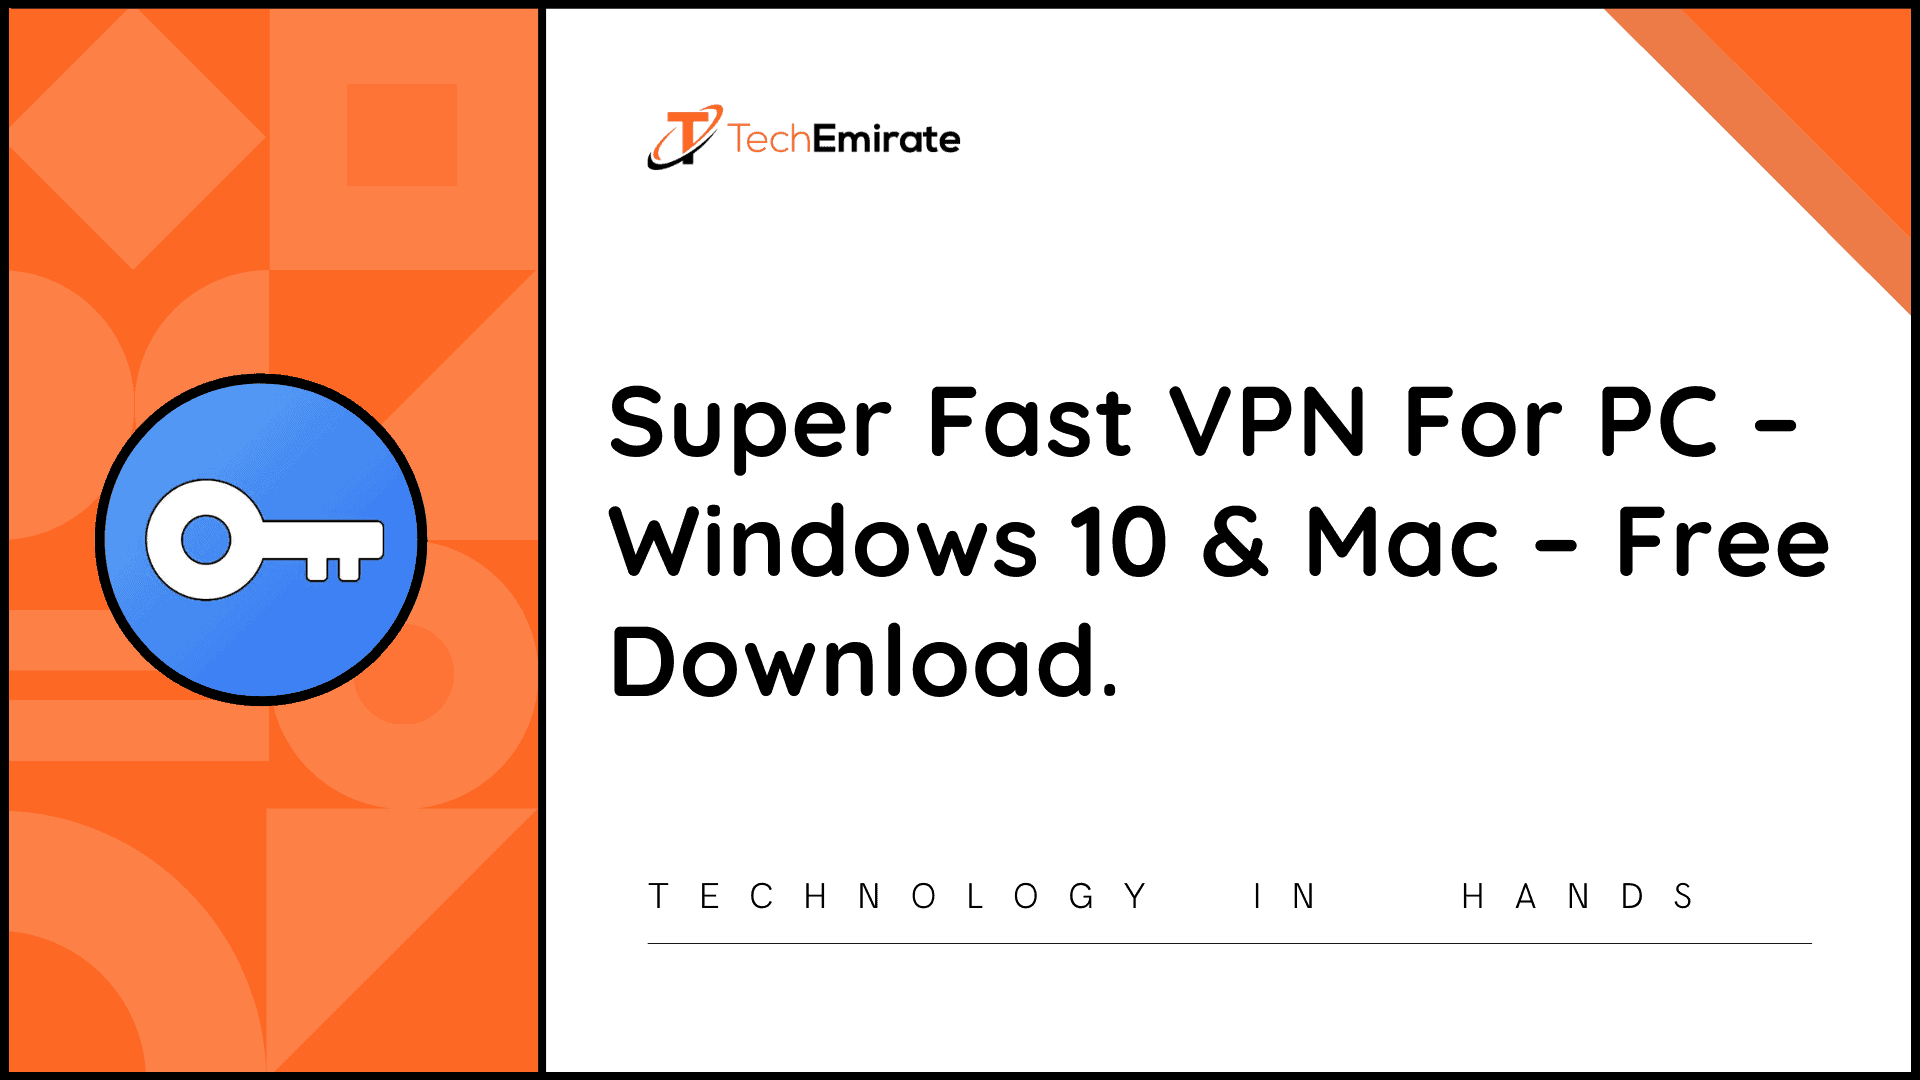 Techemirate - Super Fast VPN for PC